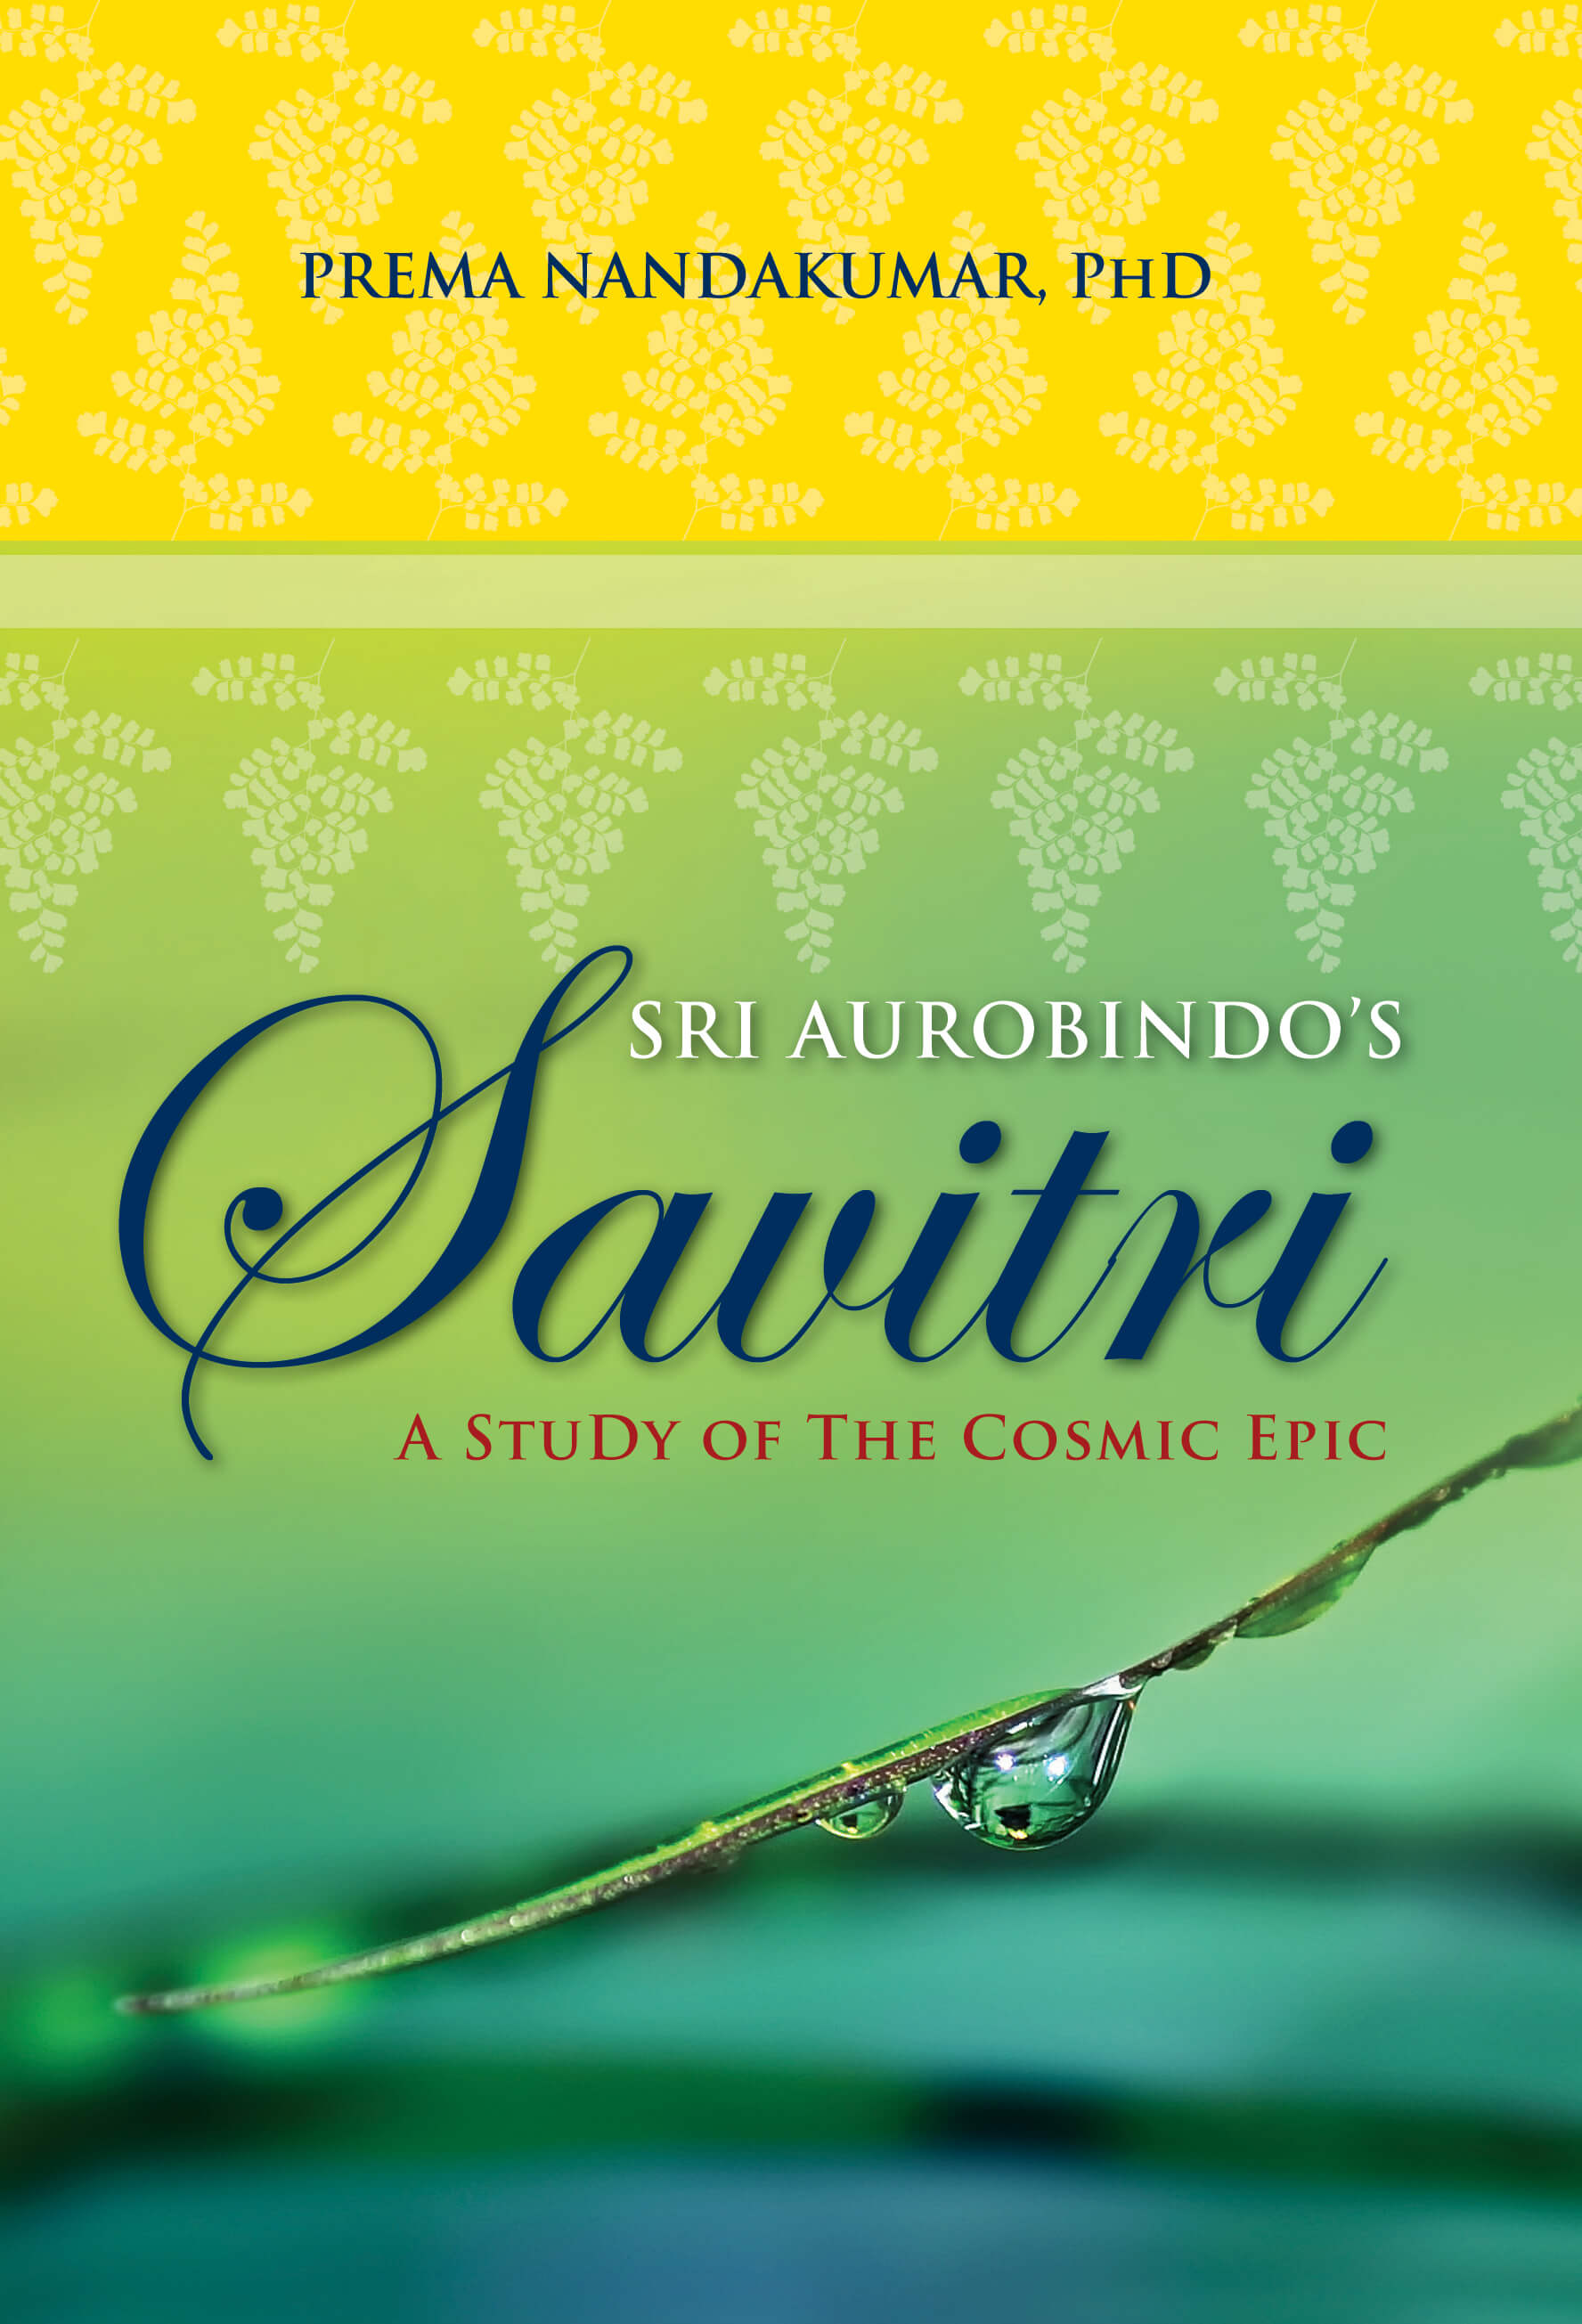 Sri Aurobindo's Savitri: A Study Of The Cosmic Epic